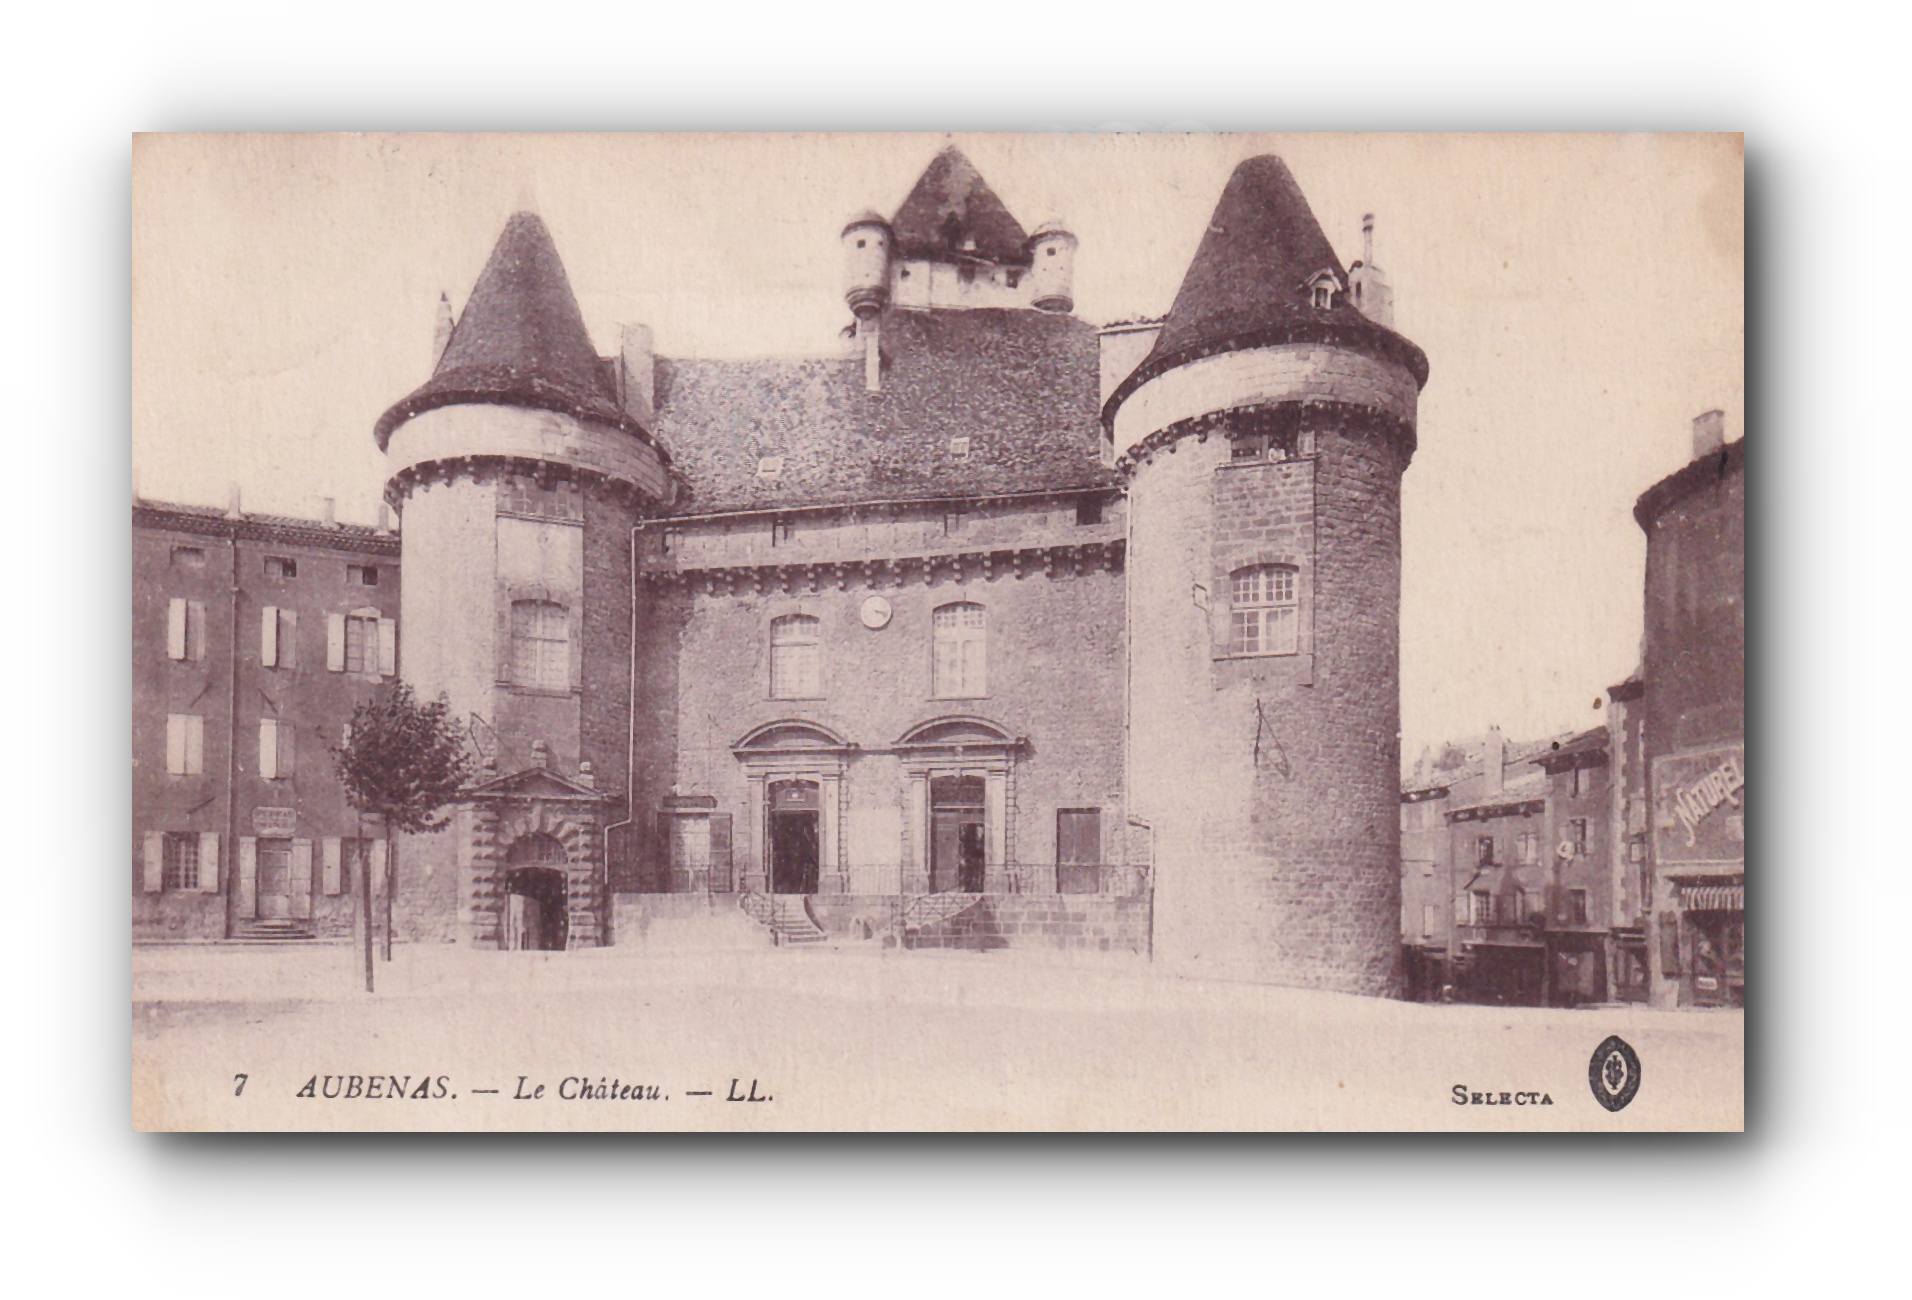 - Le Château - AUBENAS - 26.01.1918 -